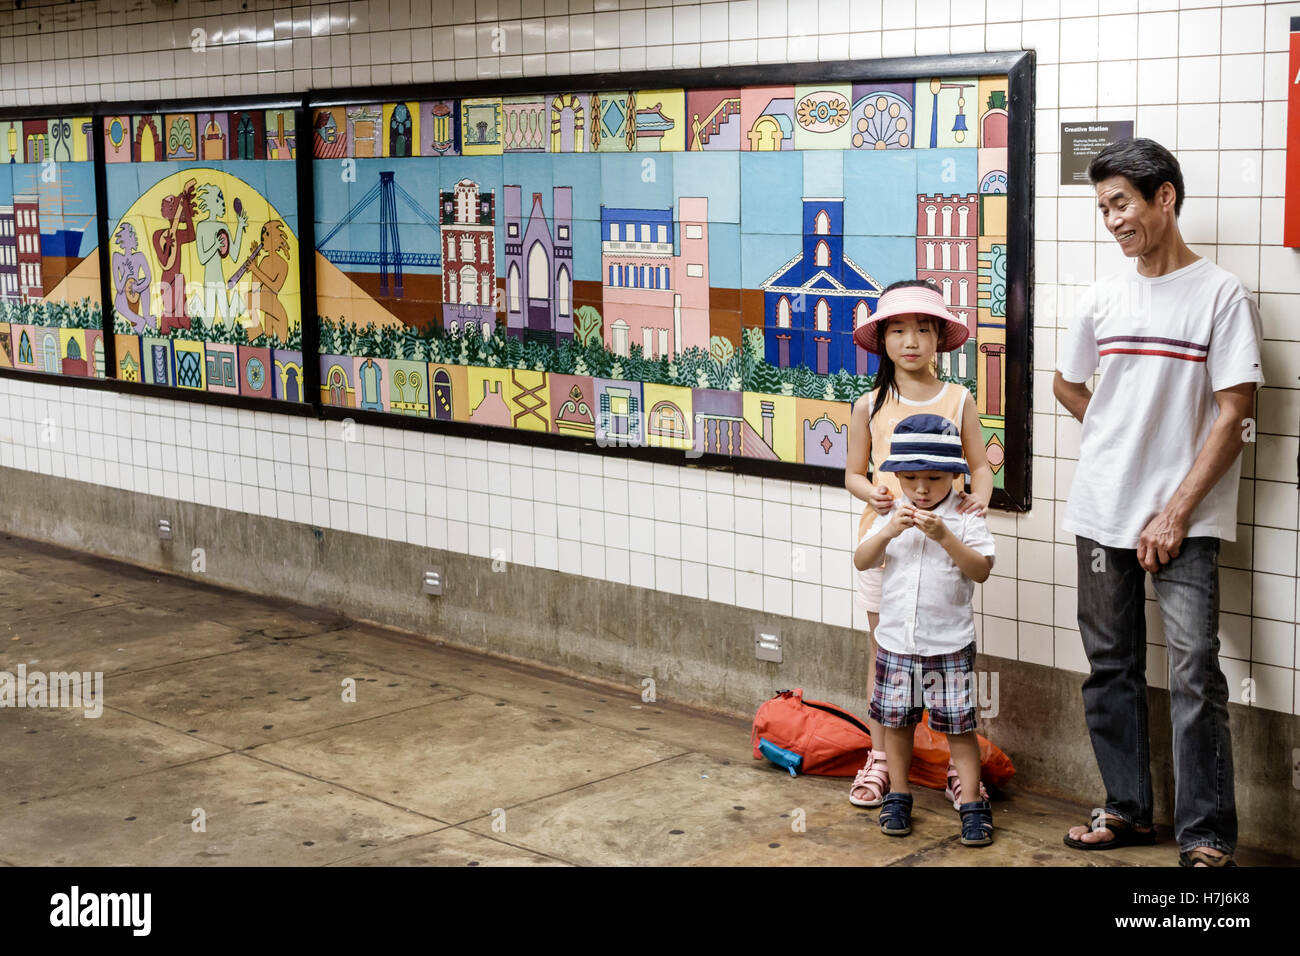 New York City,NY NYC,Lower Manhattan,subway,MTA,public transportation,rapid transit,East Broadway,station,art artwork,artwork,mural,Displacing Details Stock Photo